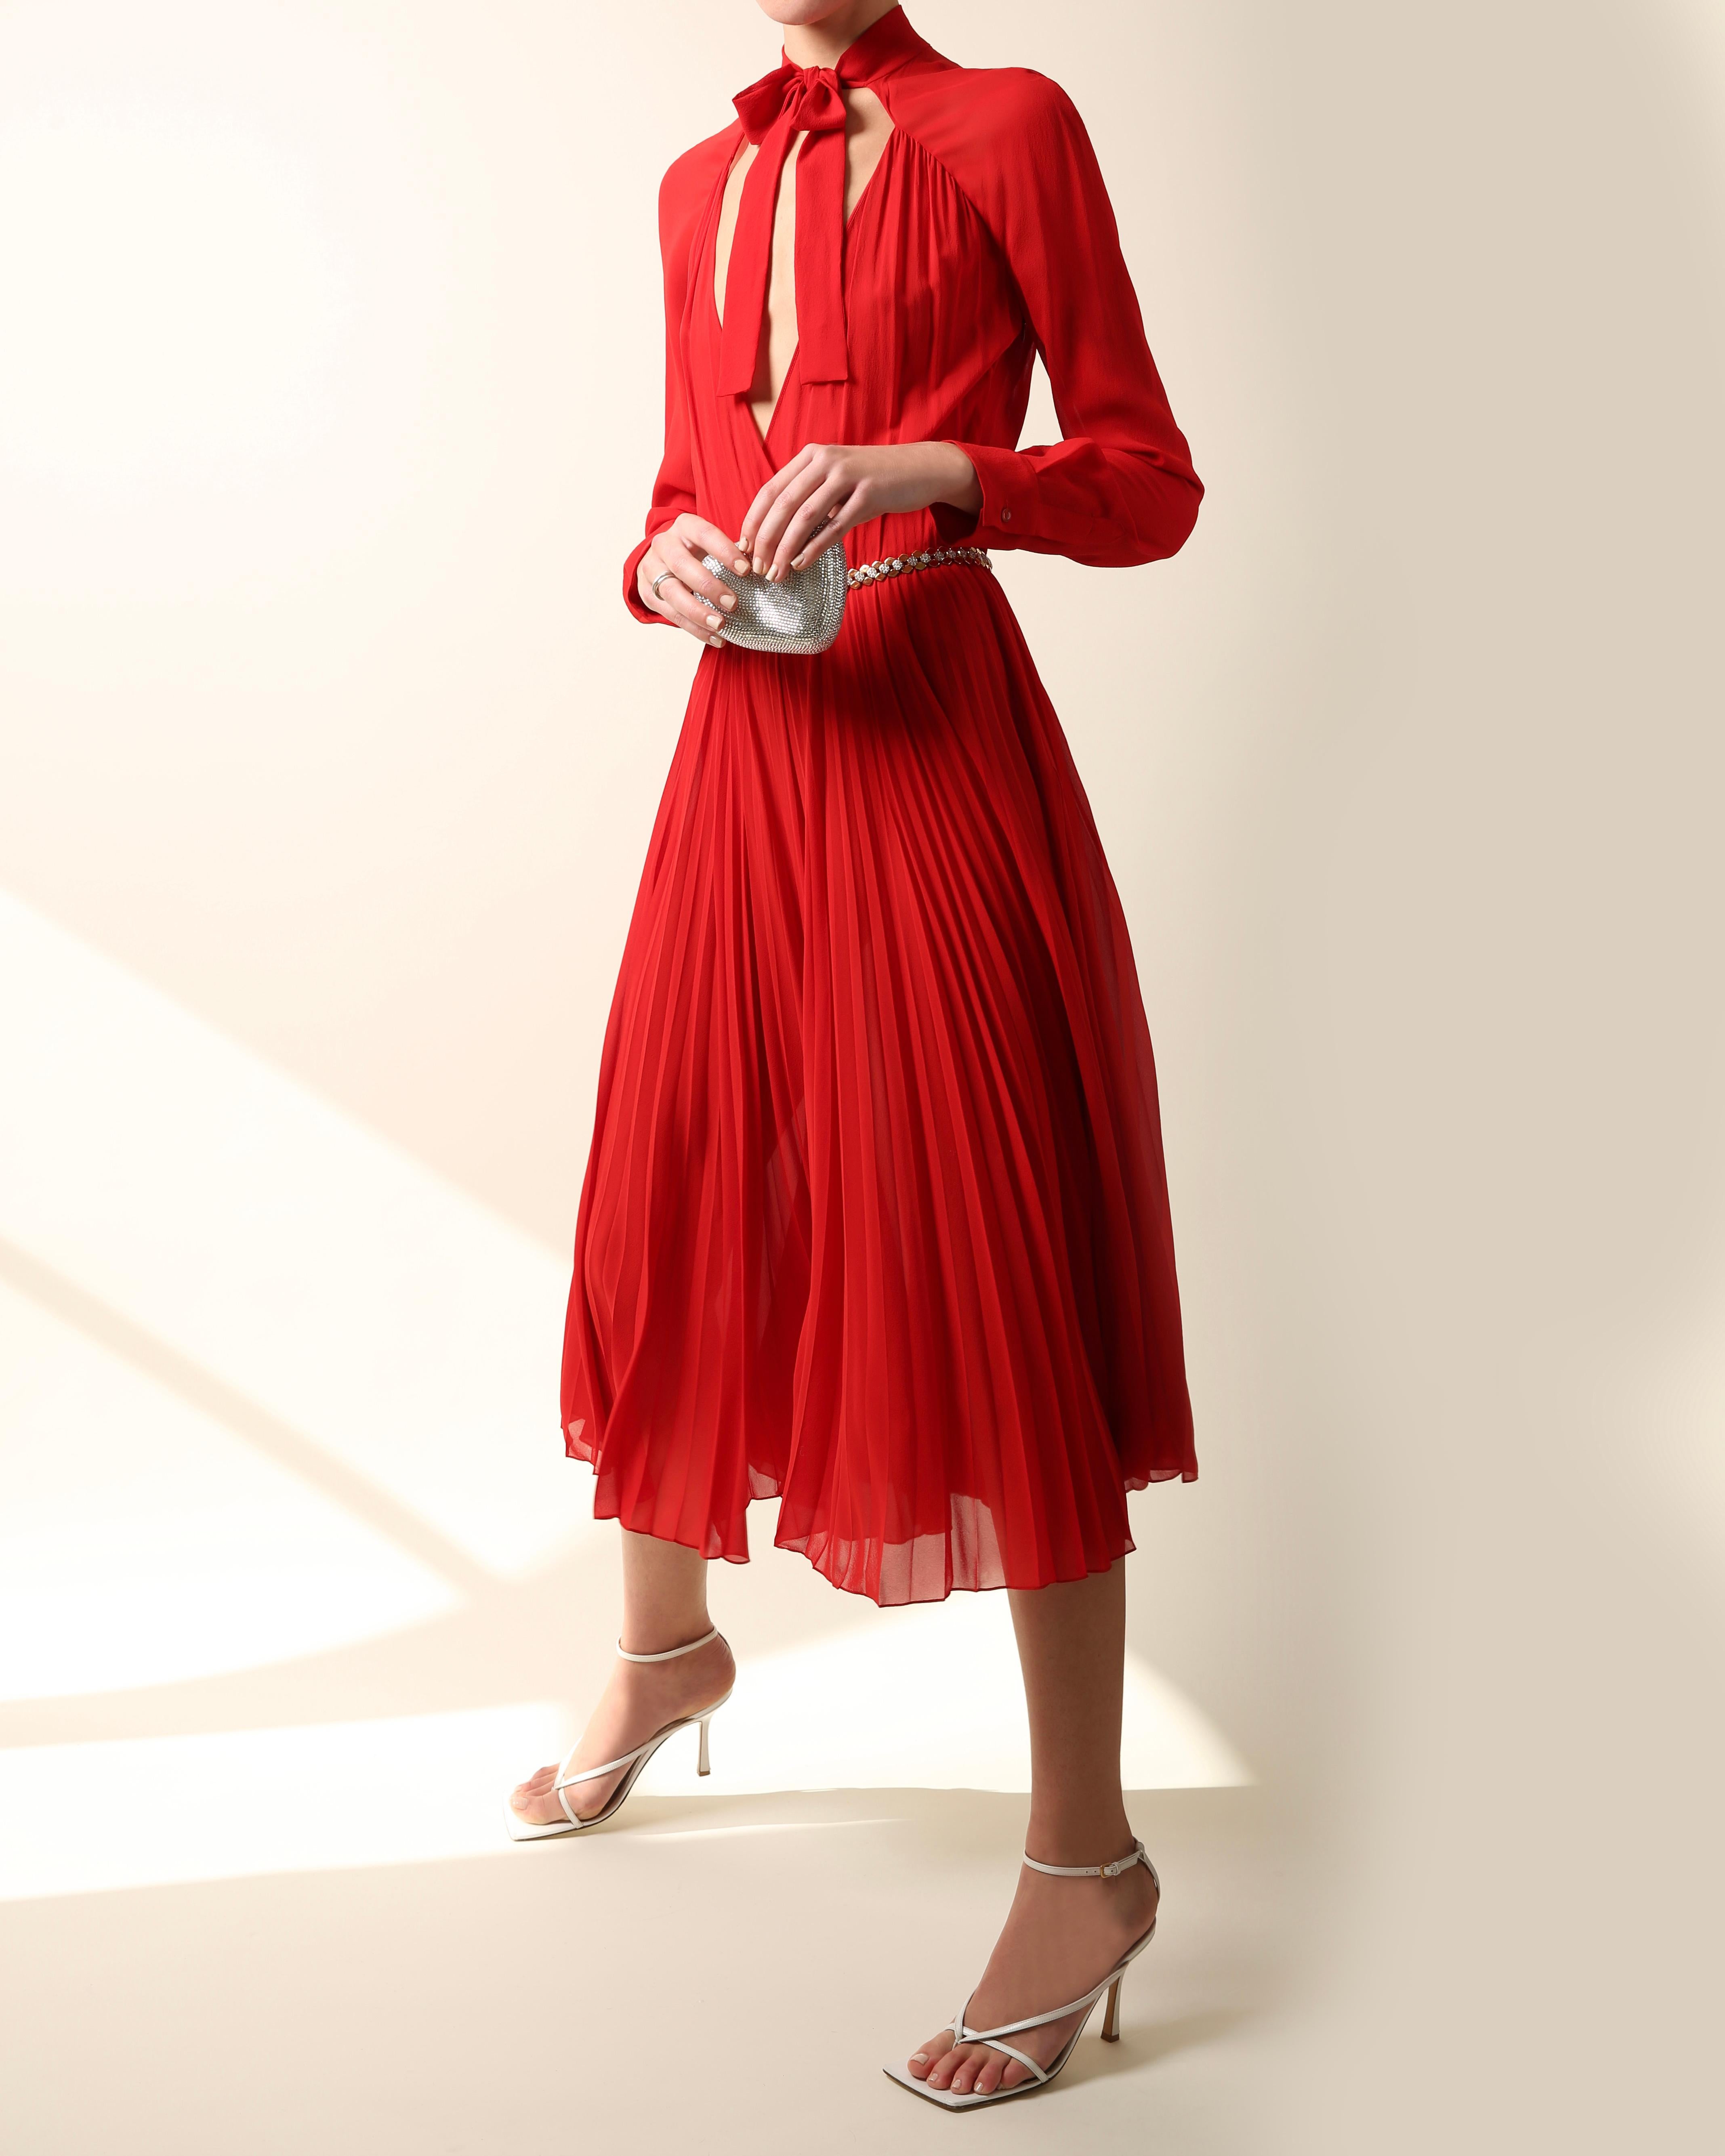 dior red dress